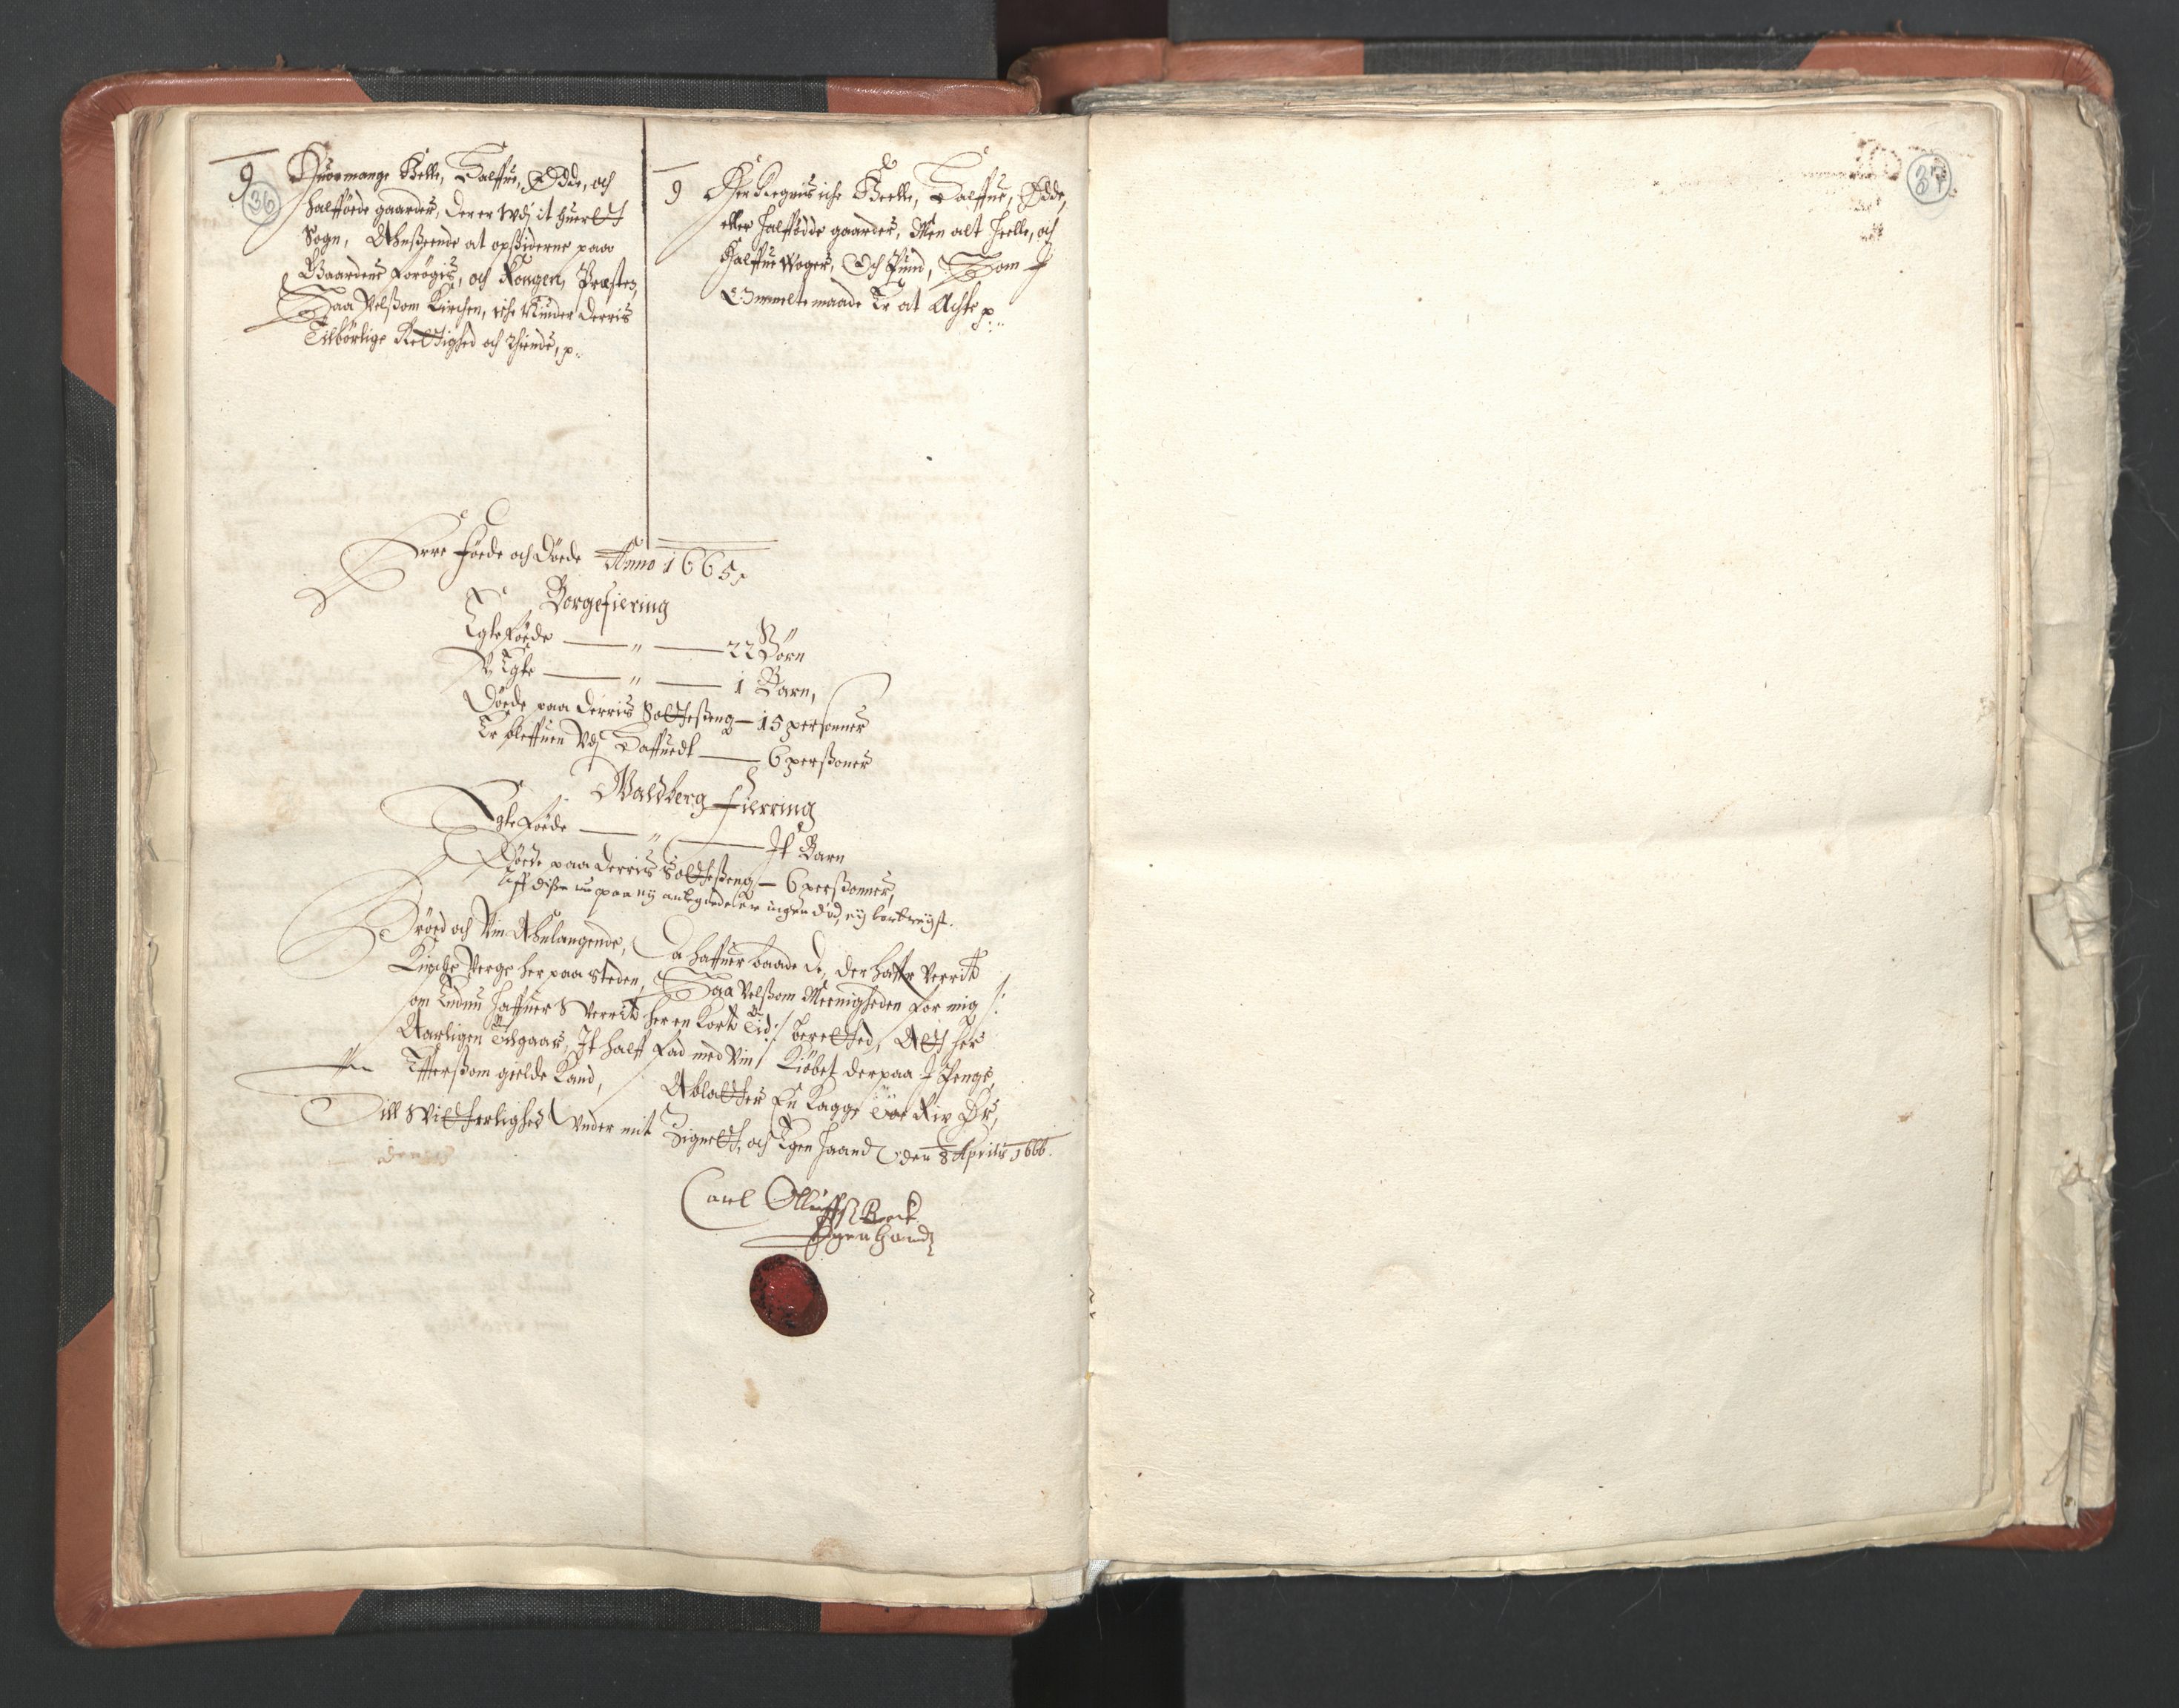 RA, Vicar's Census 1664-1666, no. 36: Lofoten and Vesterålen deanery, Senja deanery and Troms deanery, 1664-1666, p. 36-37